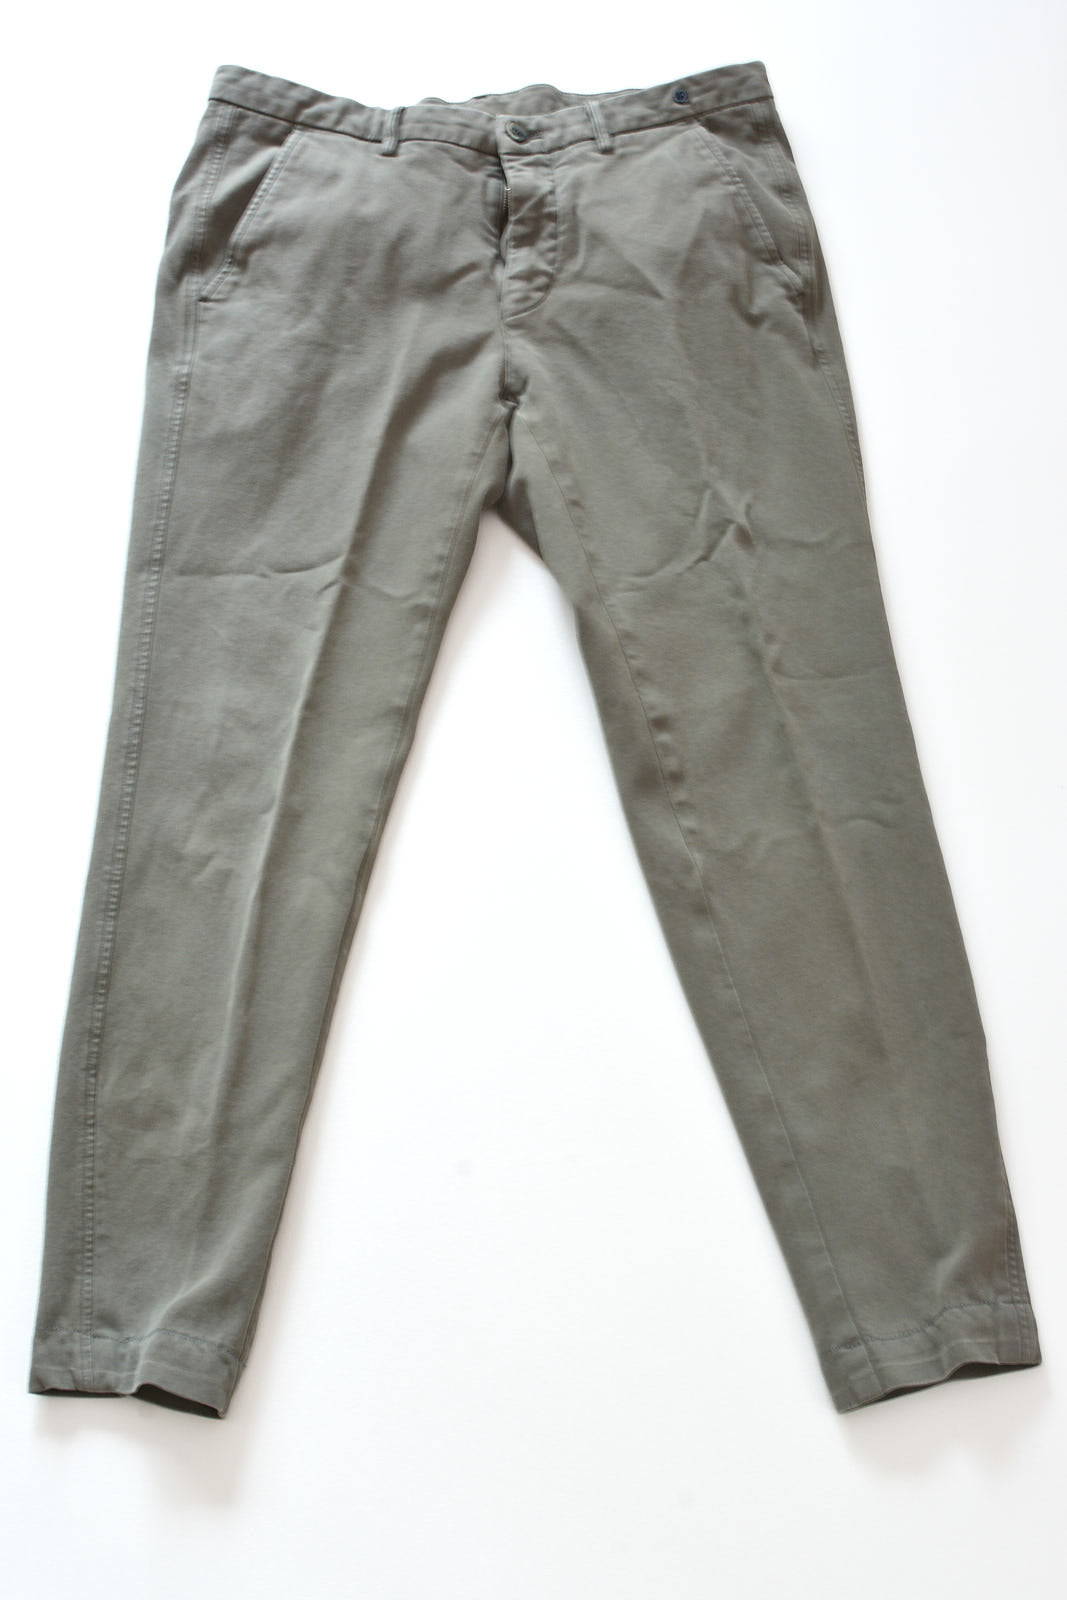 MASON'S EM'S New York Gray Cotton Stretch Chino Pants EU 48 US 32 MASON'S